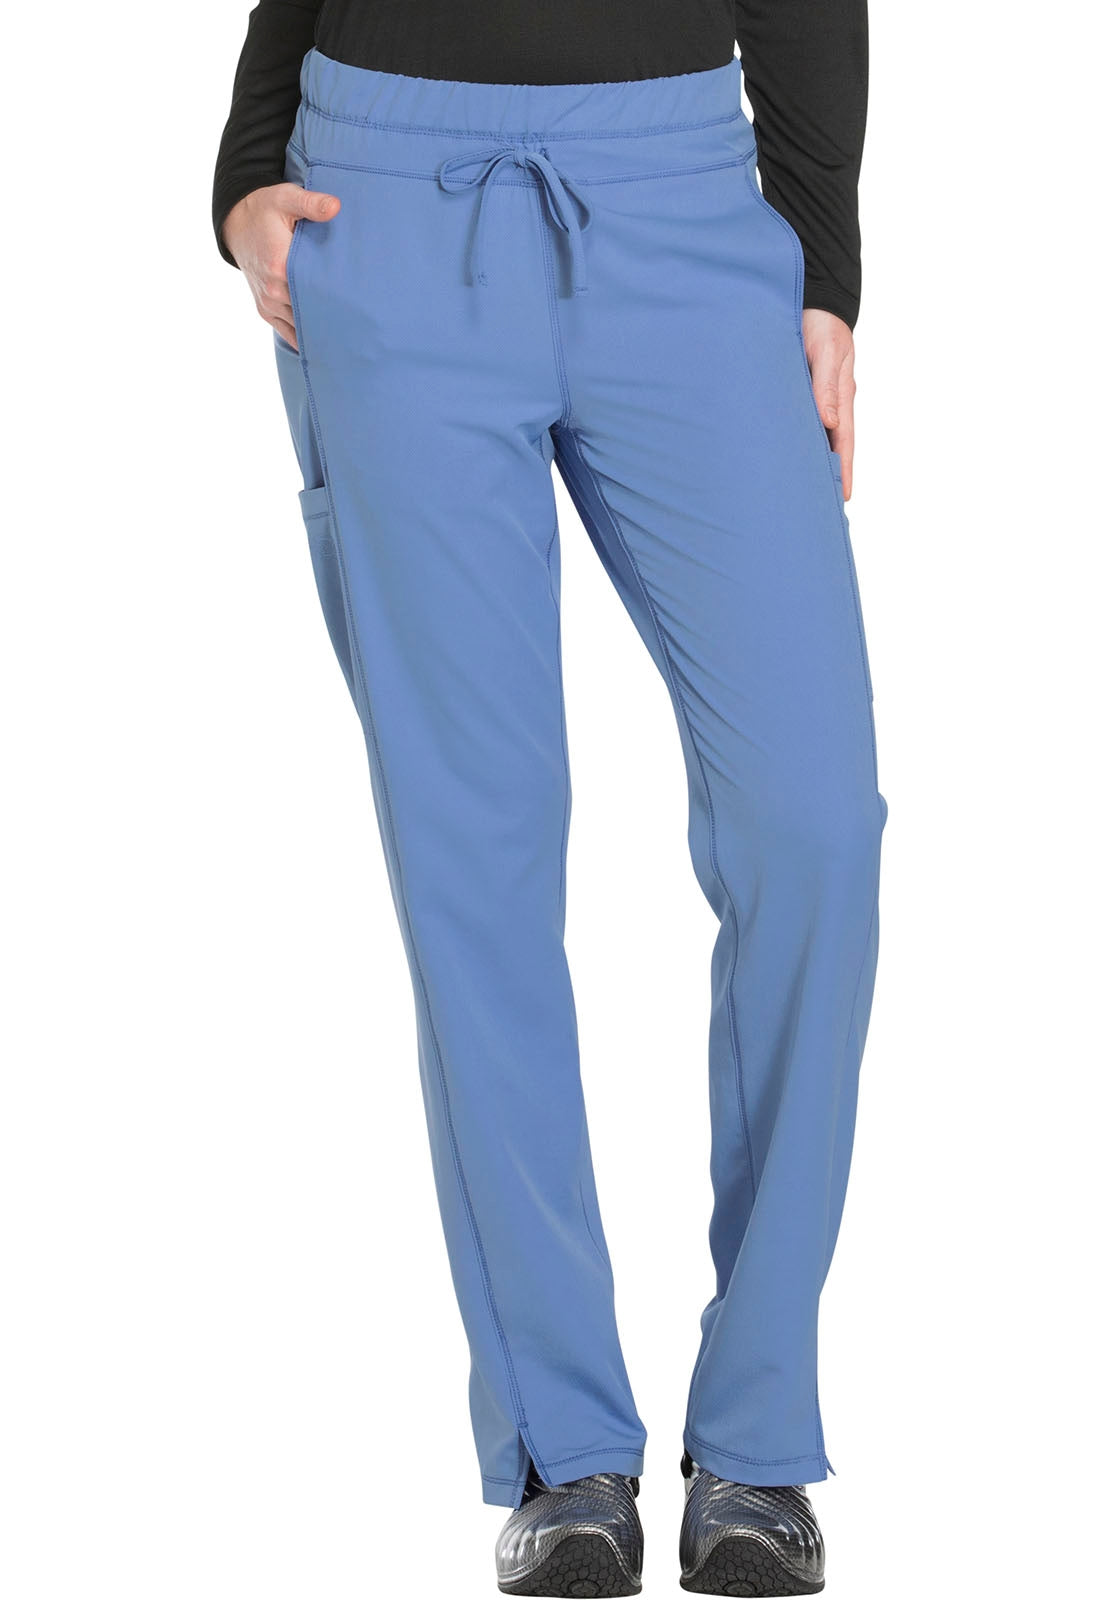 Target Try-On 1.23 - Blushing Rose Style Blog | Drawstring pants fashion,  Pants outfit fall, Drawstring pants outfit